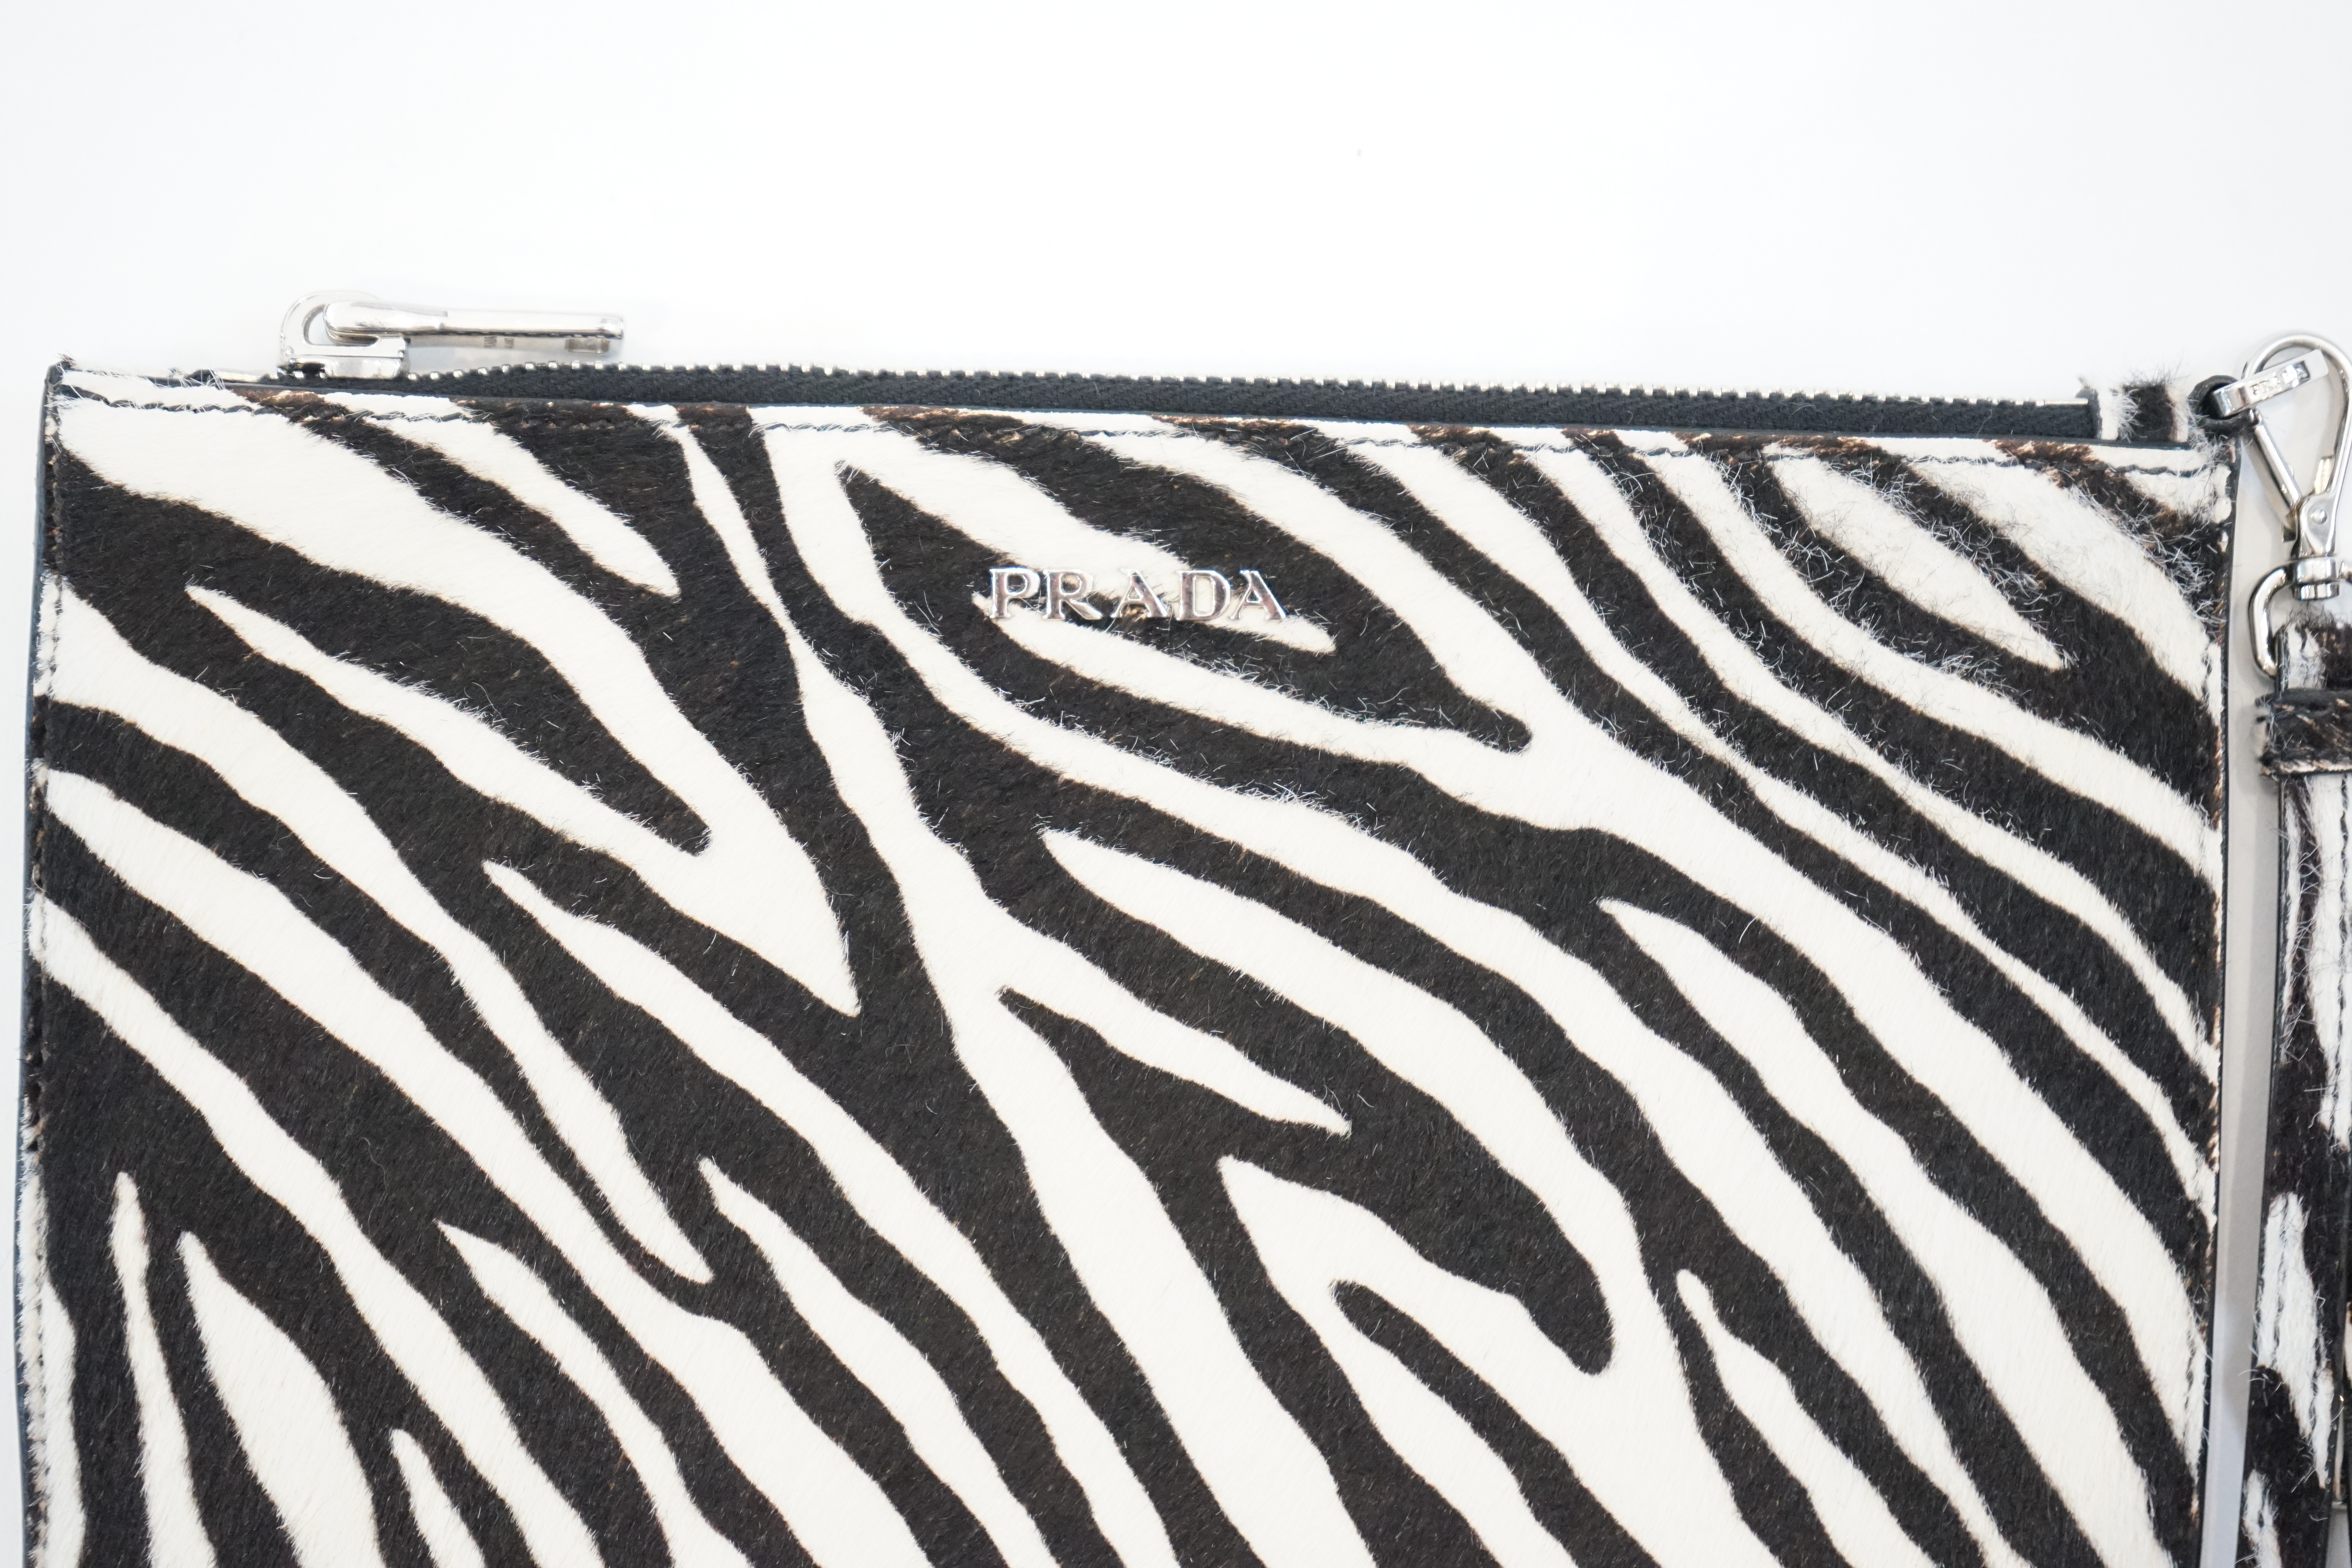 A Prada zebra print pony skin purse bag, width 21cm, height 13cm